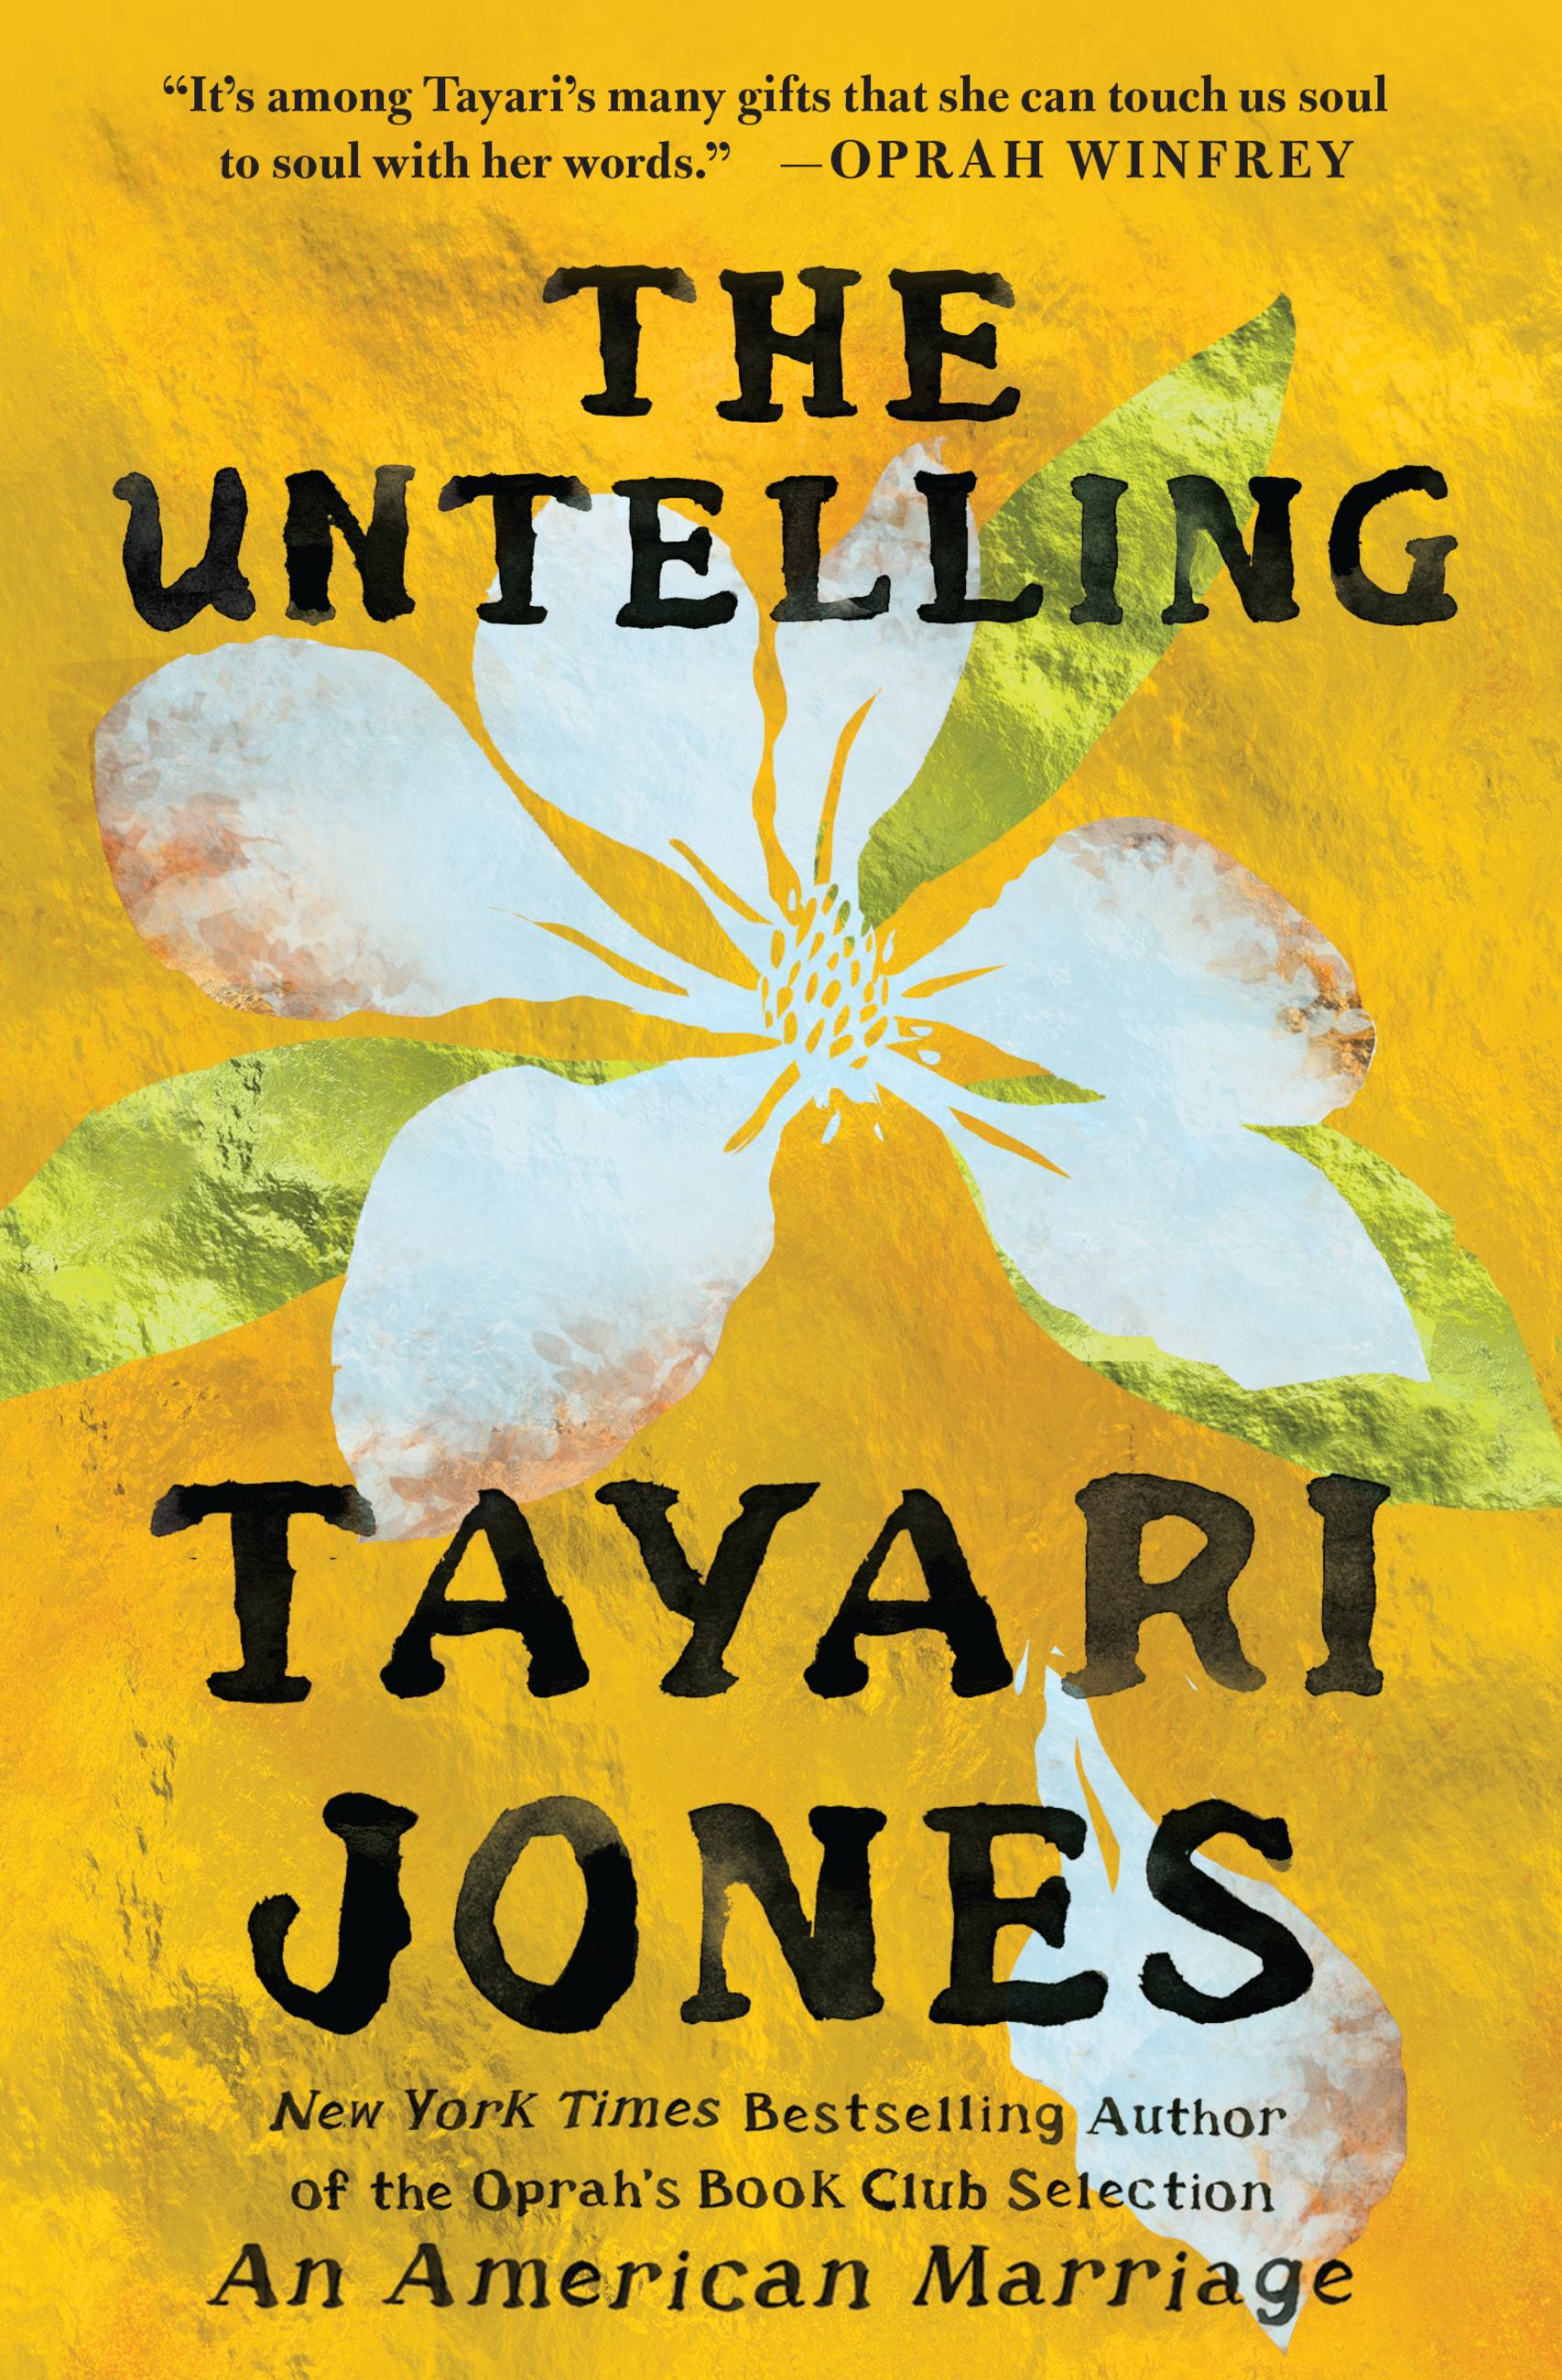 The Untelling by Tayari Jones   Hachette Book Group